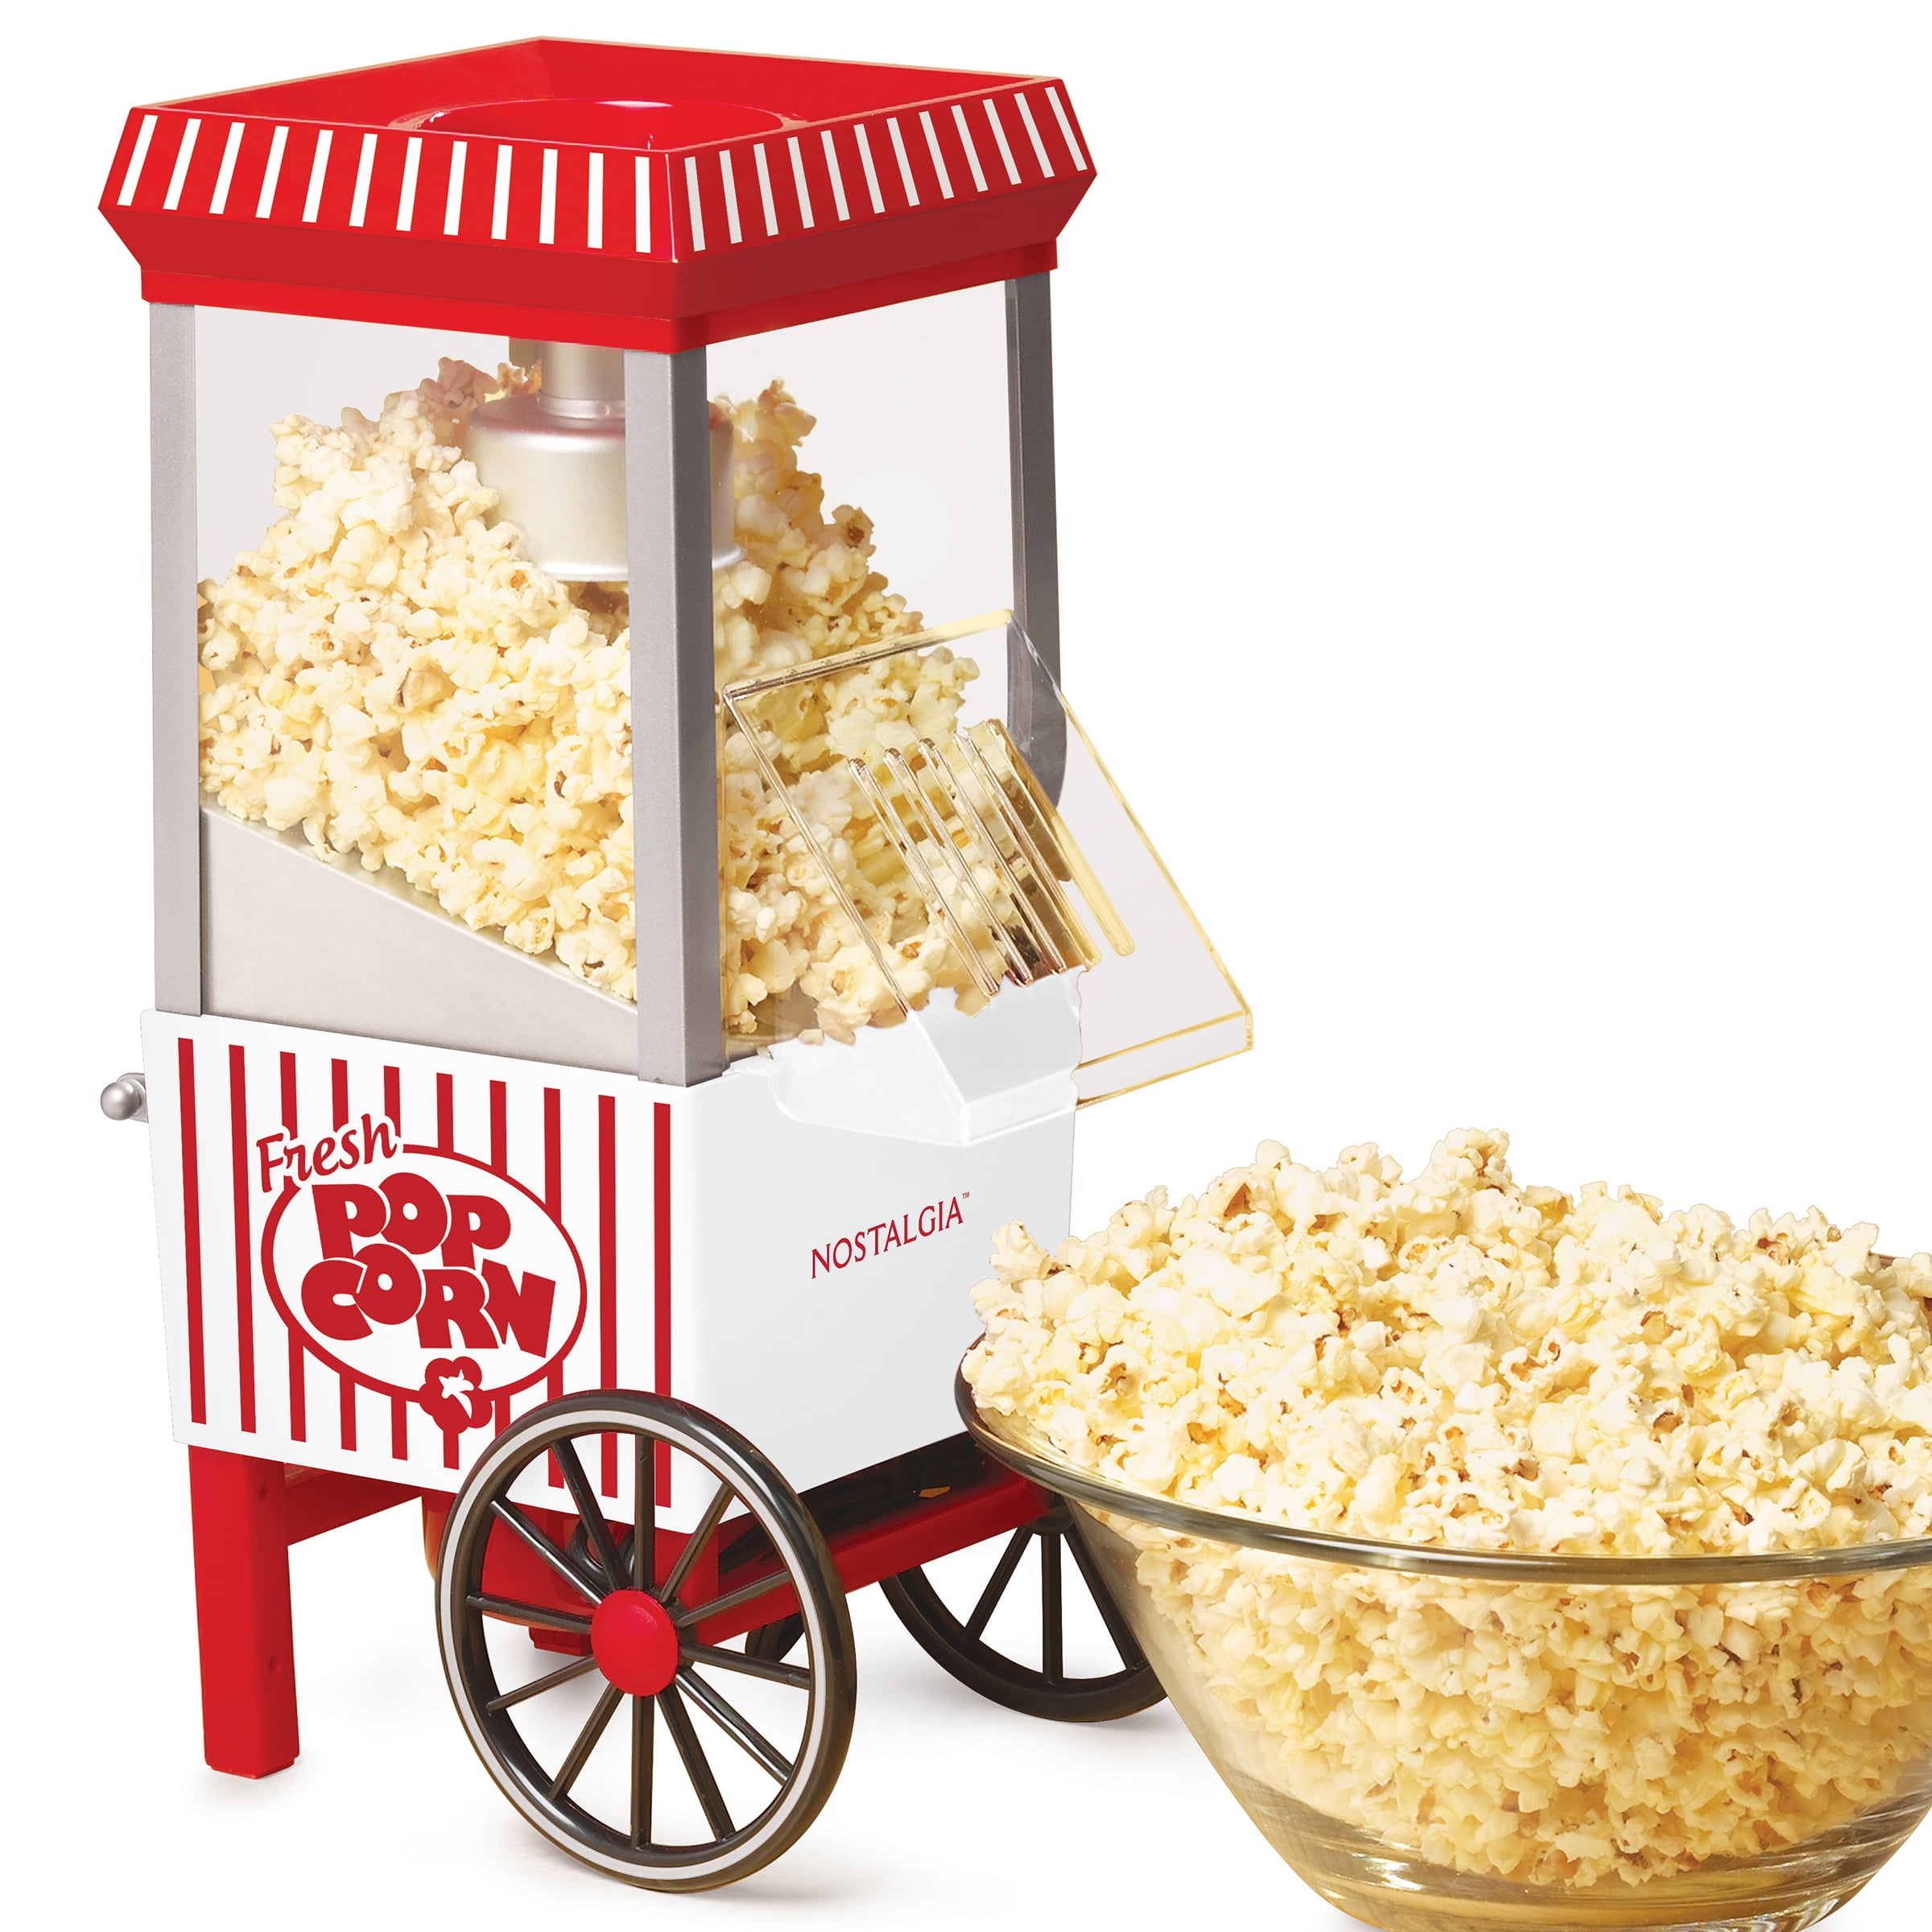 Nostalgia Old Fashioned Hot Air Popcorn Maker, OFP521